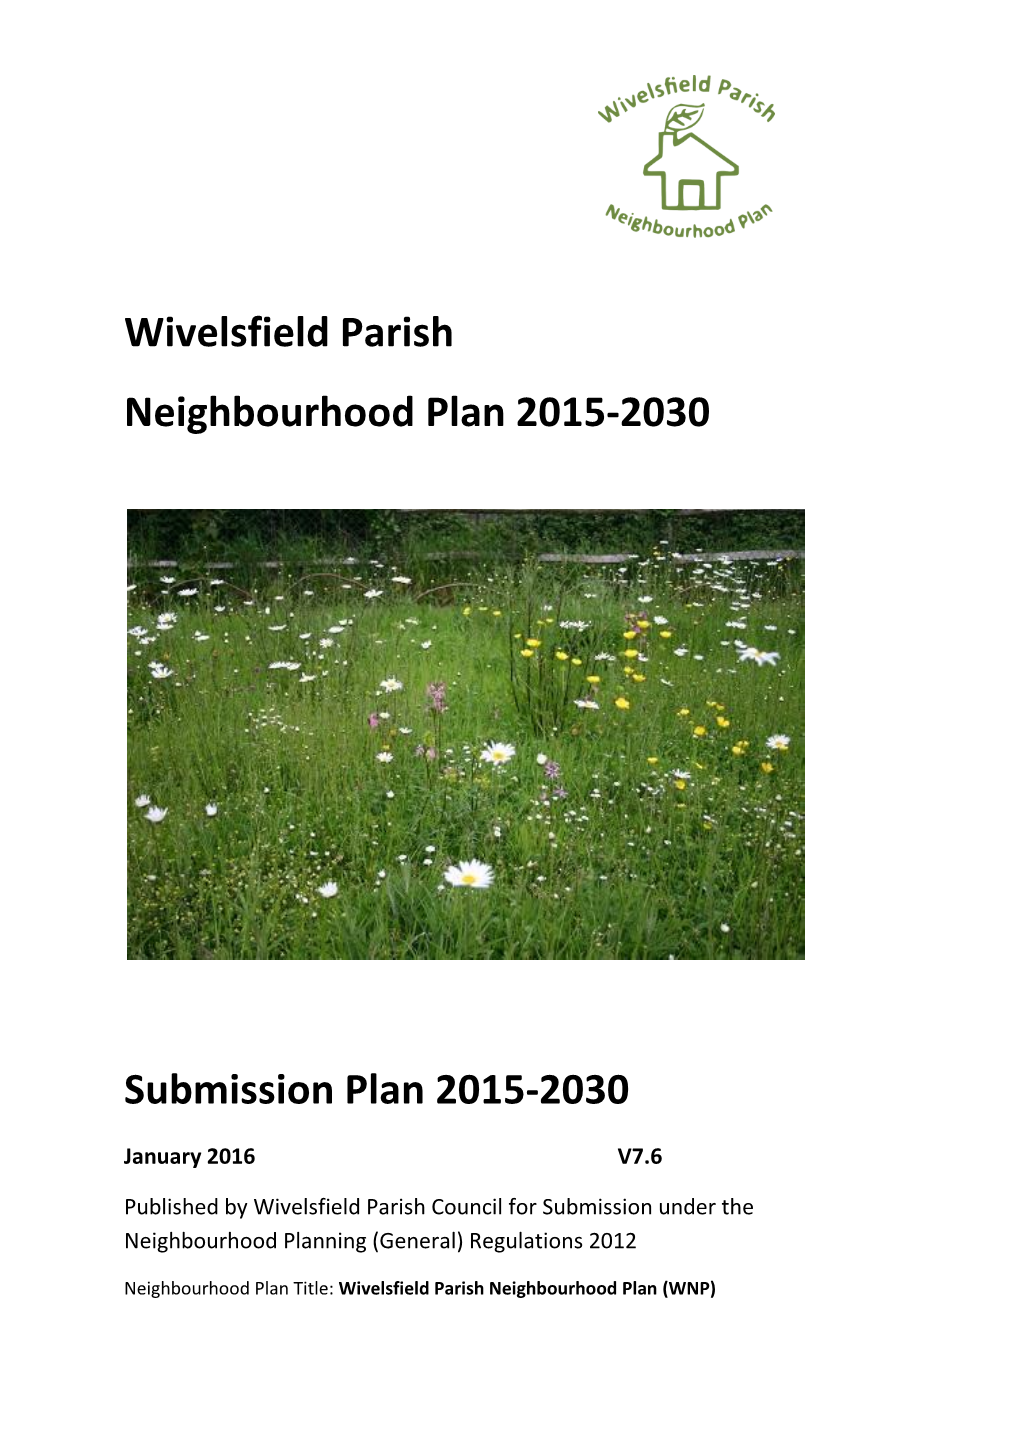 Wivelsfield Parish Neighbourhood Plan 2015-2030